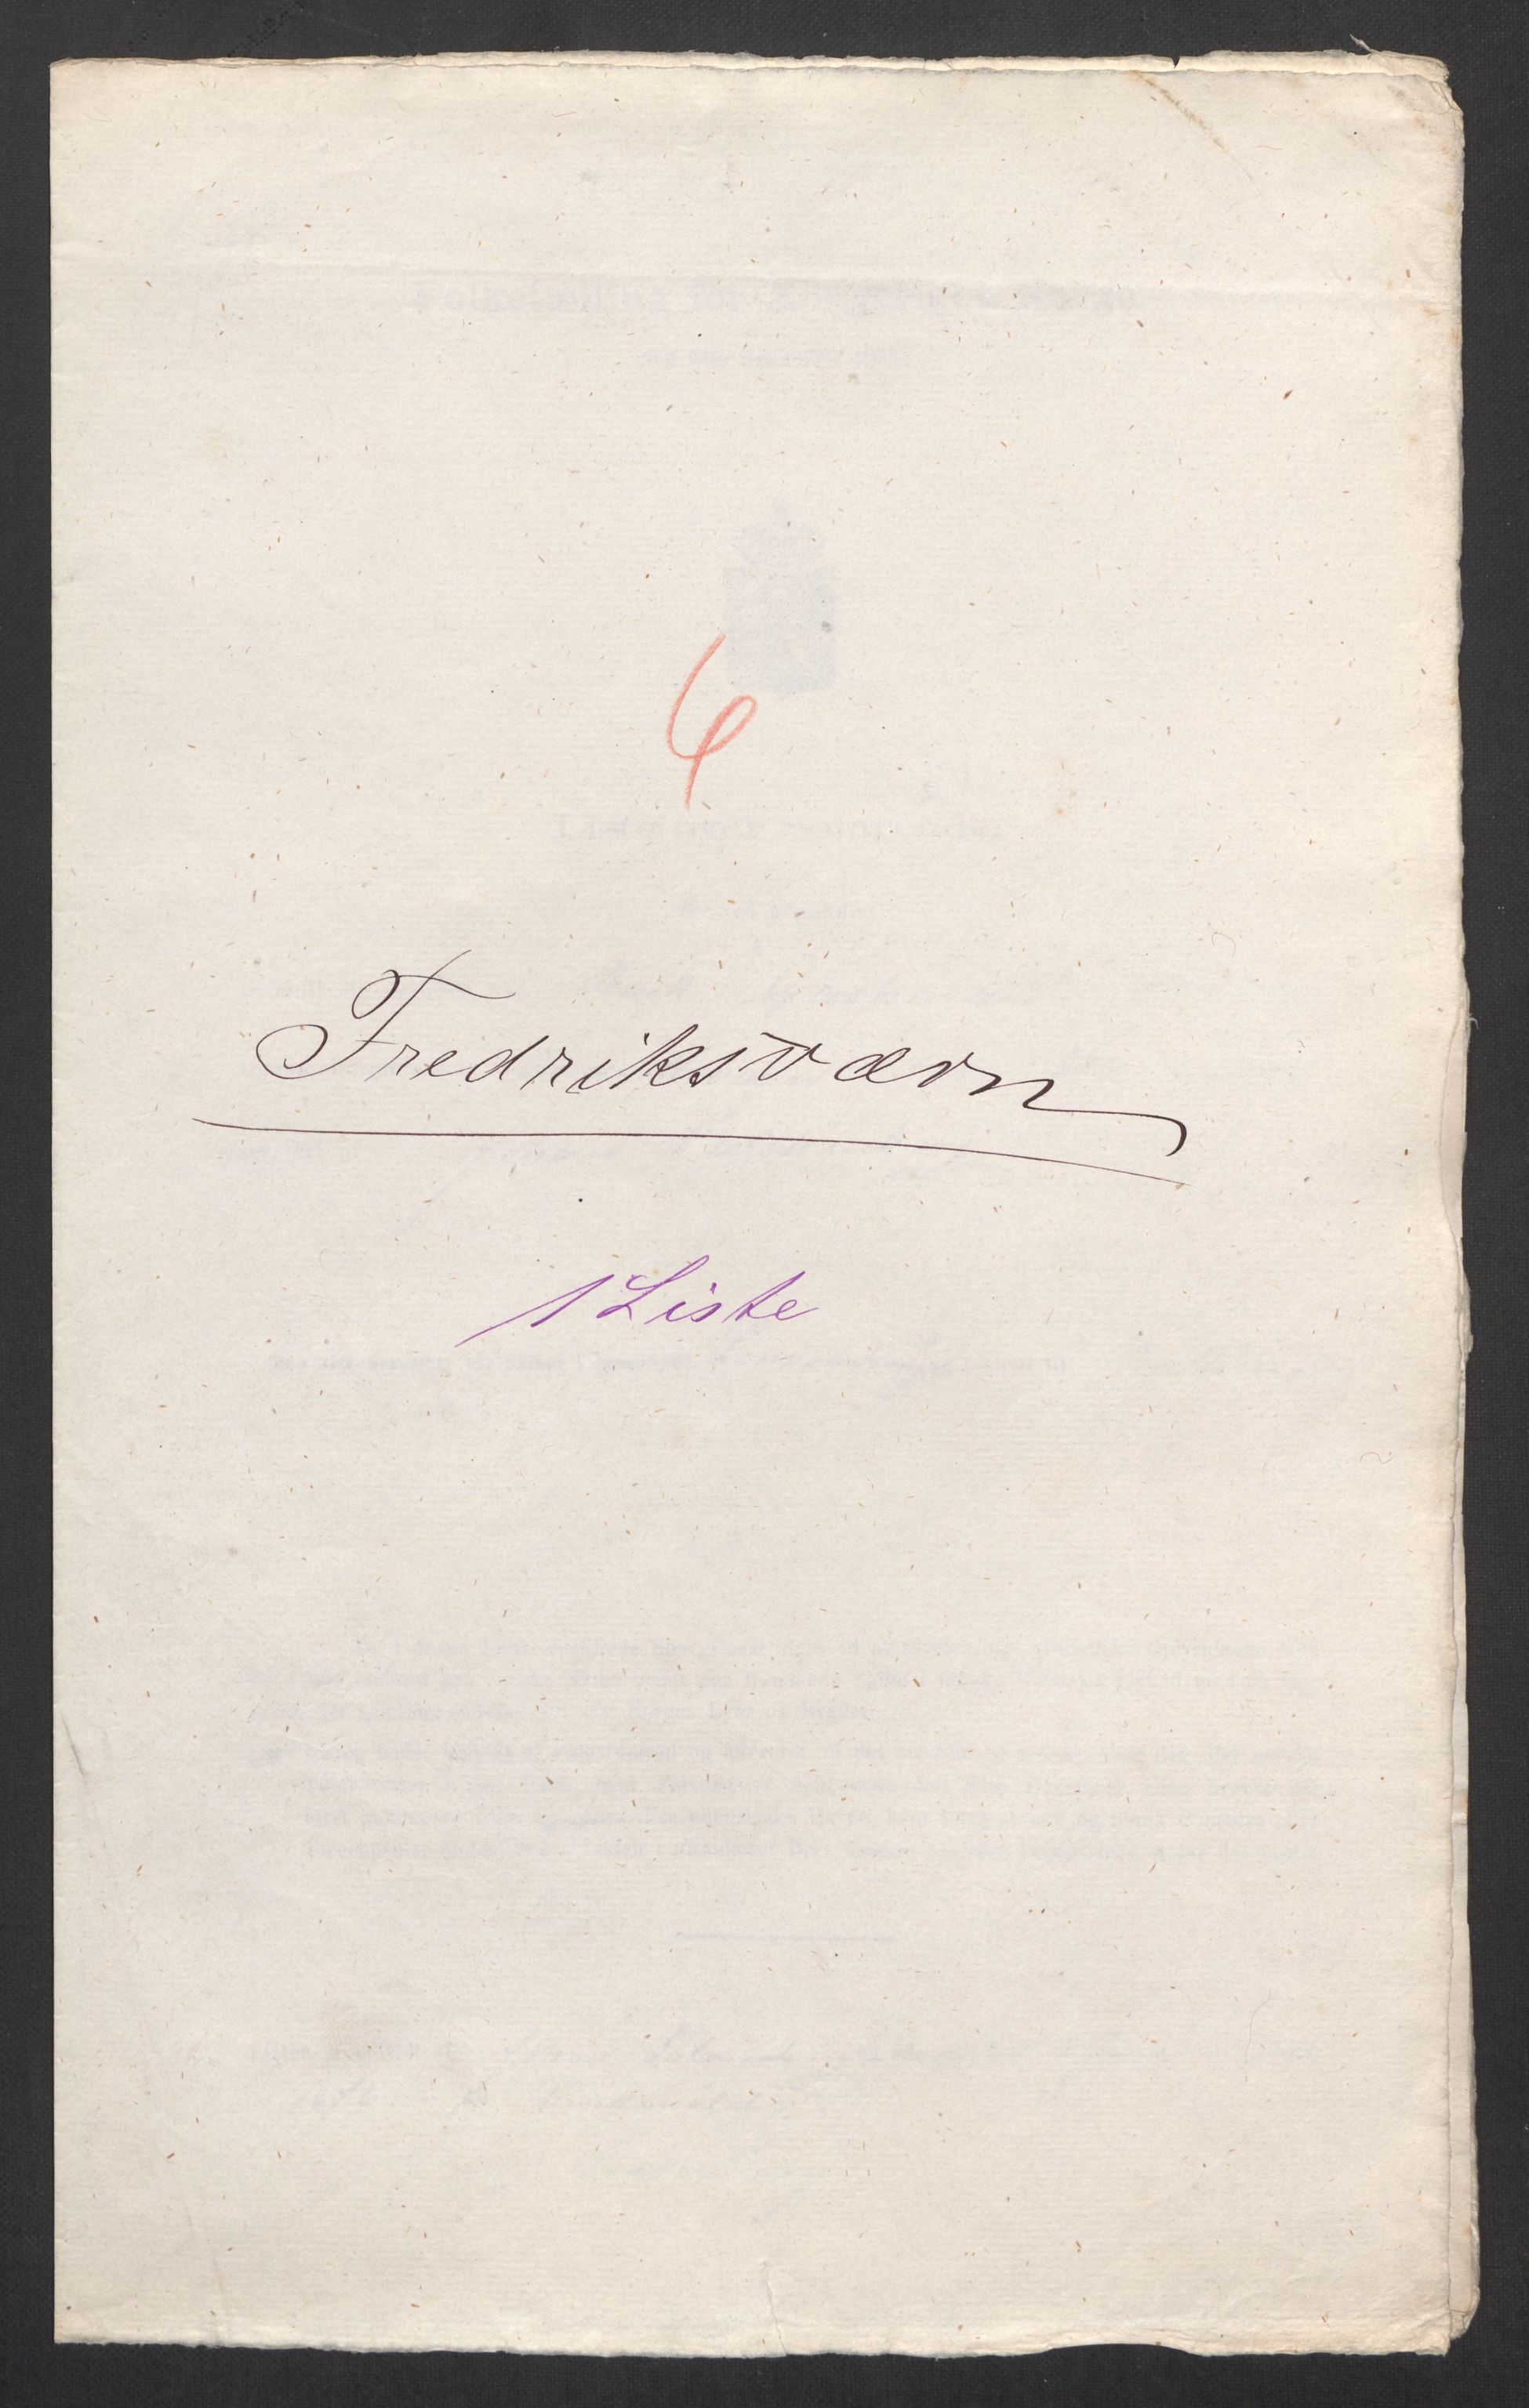 RA, Folketelling 1875, skipslister: Skip i utenrikske havner, hjemmehørende i 1) byer og ladesteder, Grimstad - Tromsø, 2) landdistrikter, 1875, s. 1141